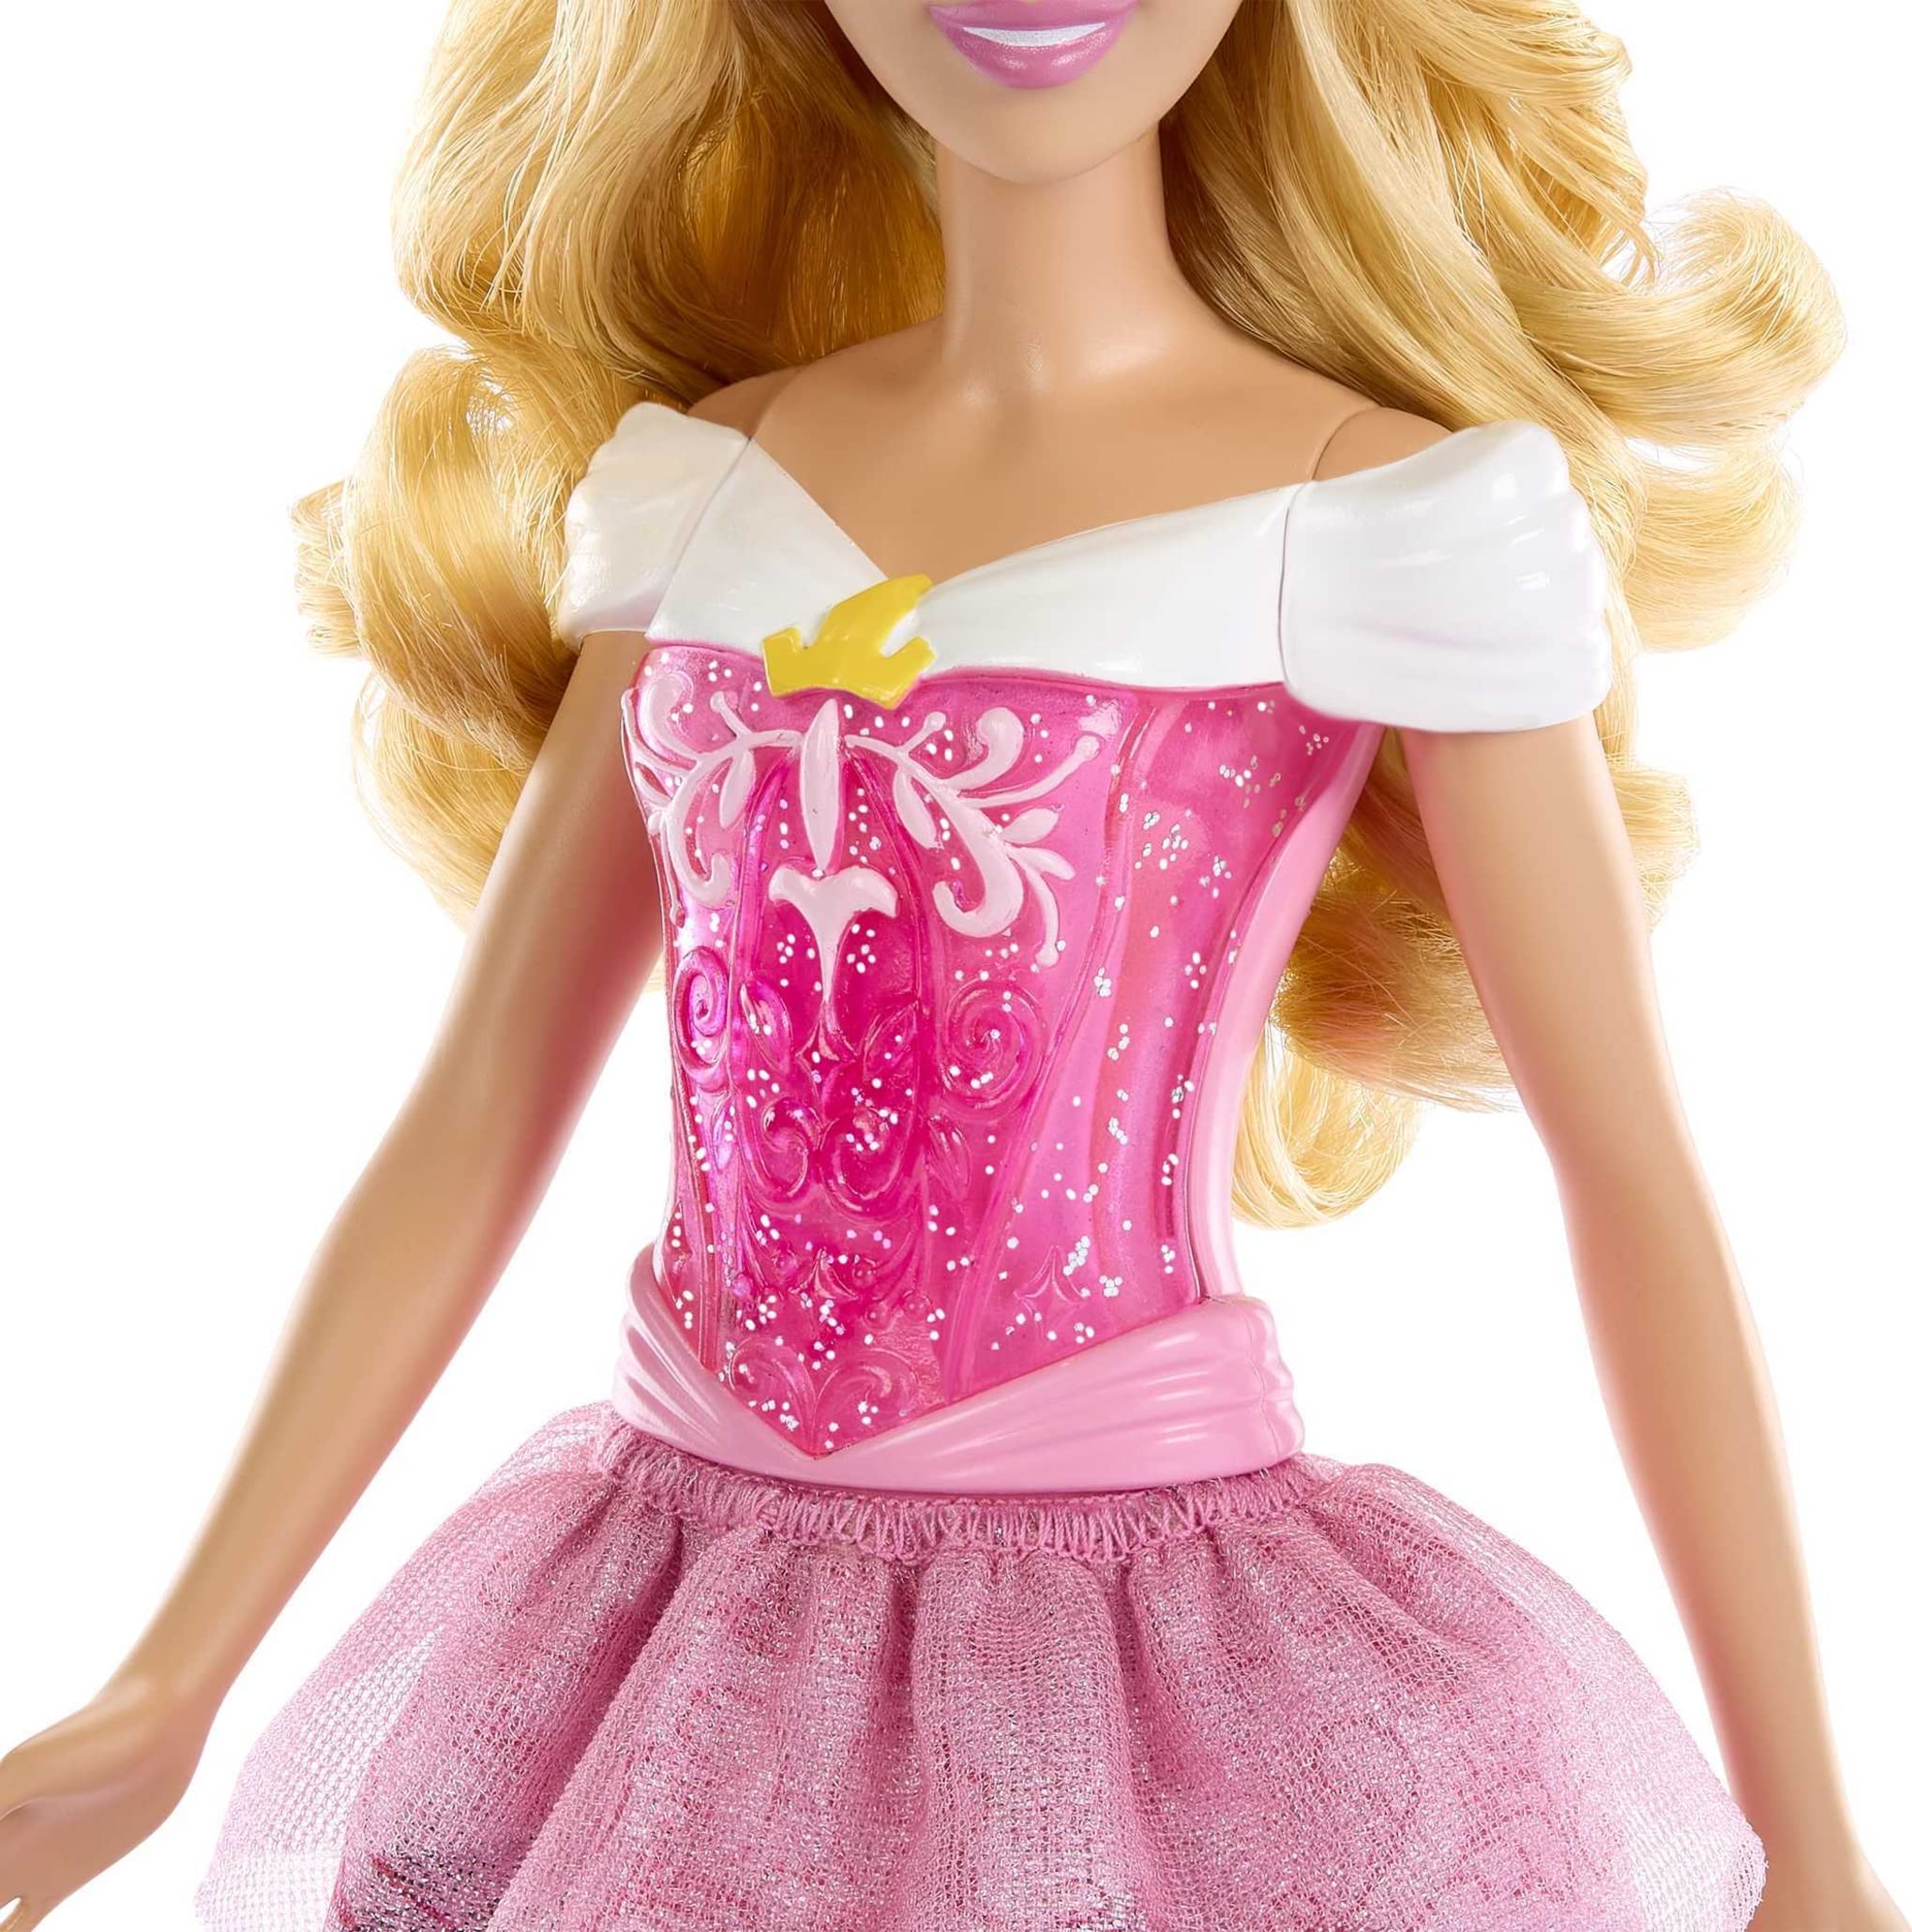 Mattel Disney Princess Aurora Fashion Doll, Sparkling Look with Blonde Hair, Purple Eyes & Tiara Accessory